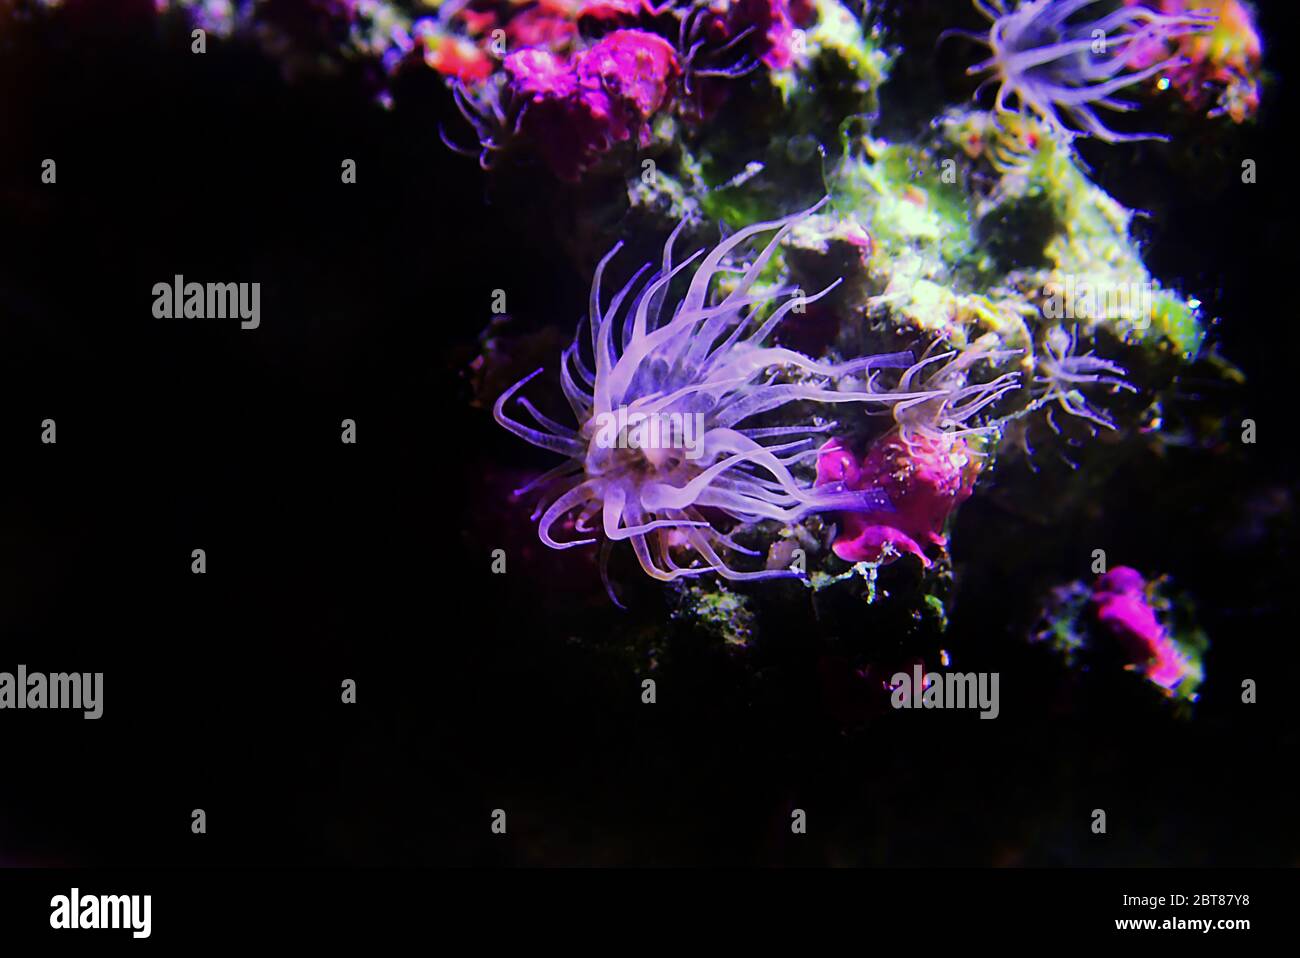 Aiptasia sea glass anemone in aquarium reef tank Stock Photo